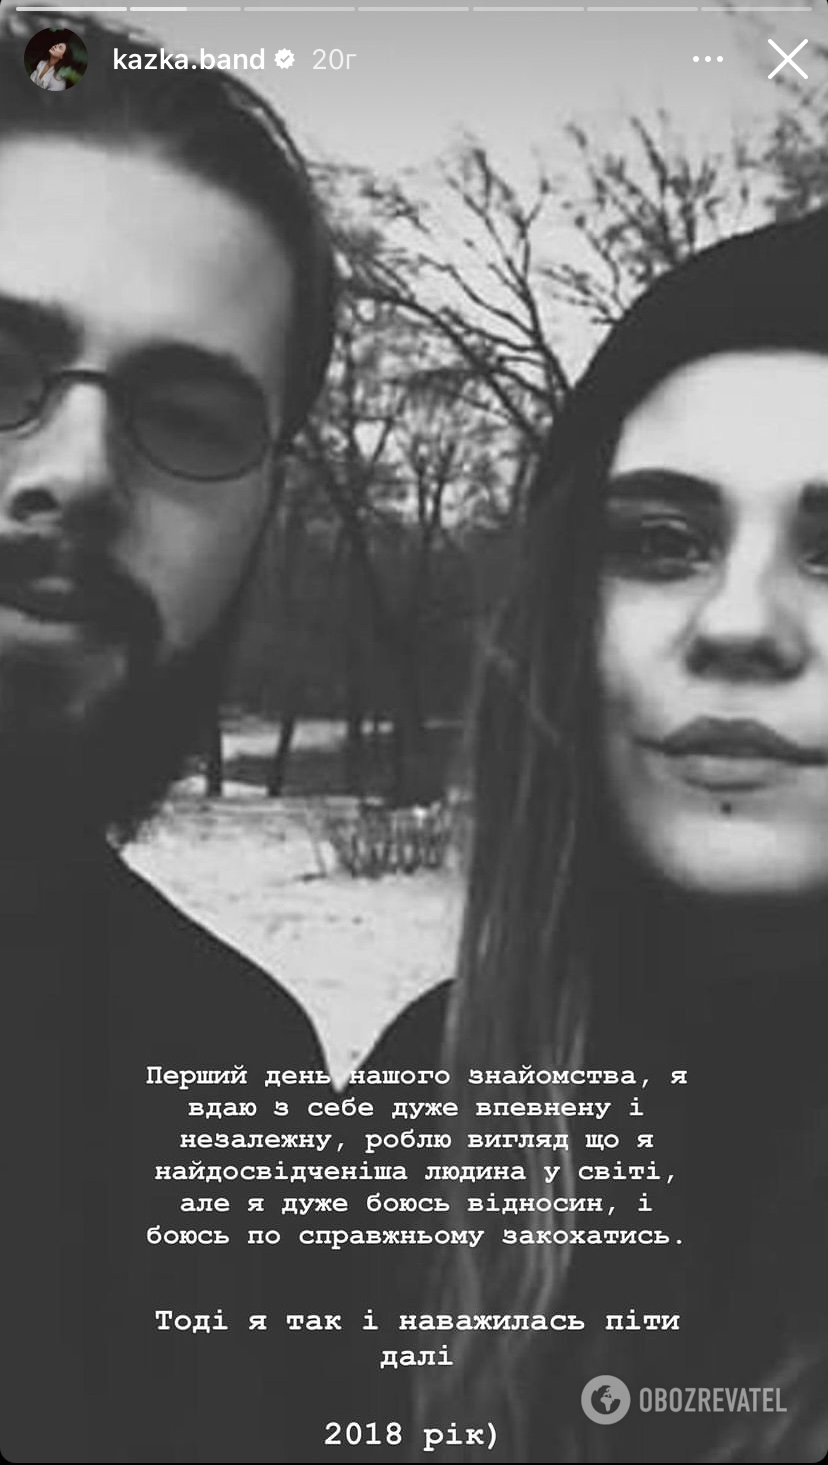 KAZKA singer Oleksandra Zaritska showed a video of her lover proposing to her for the first time